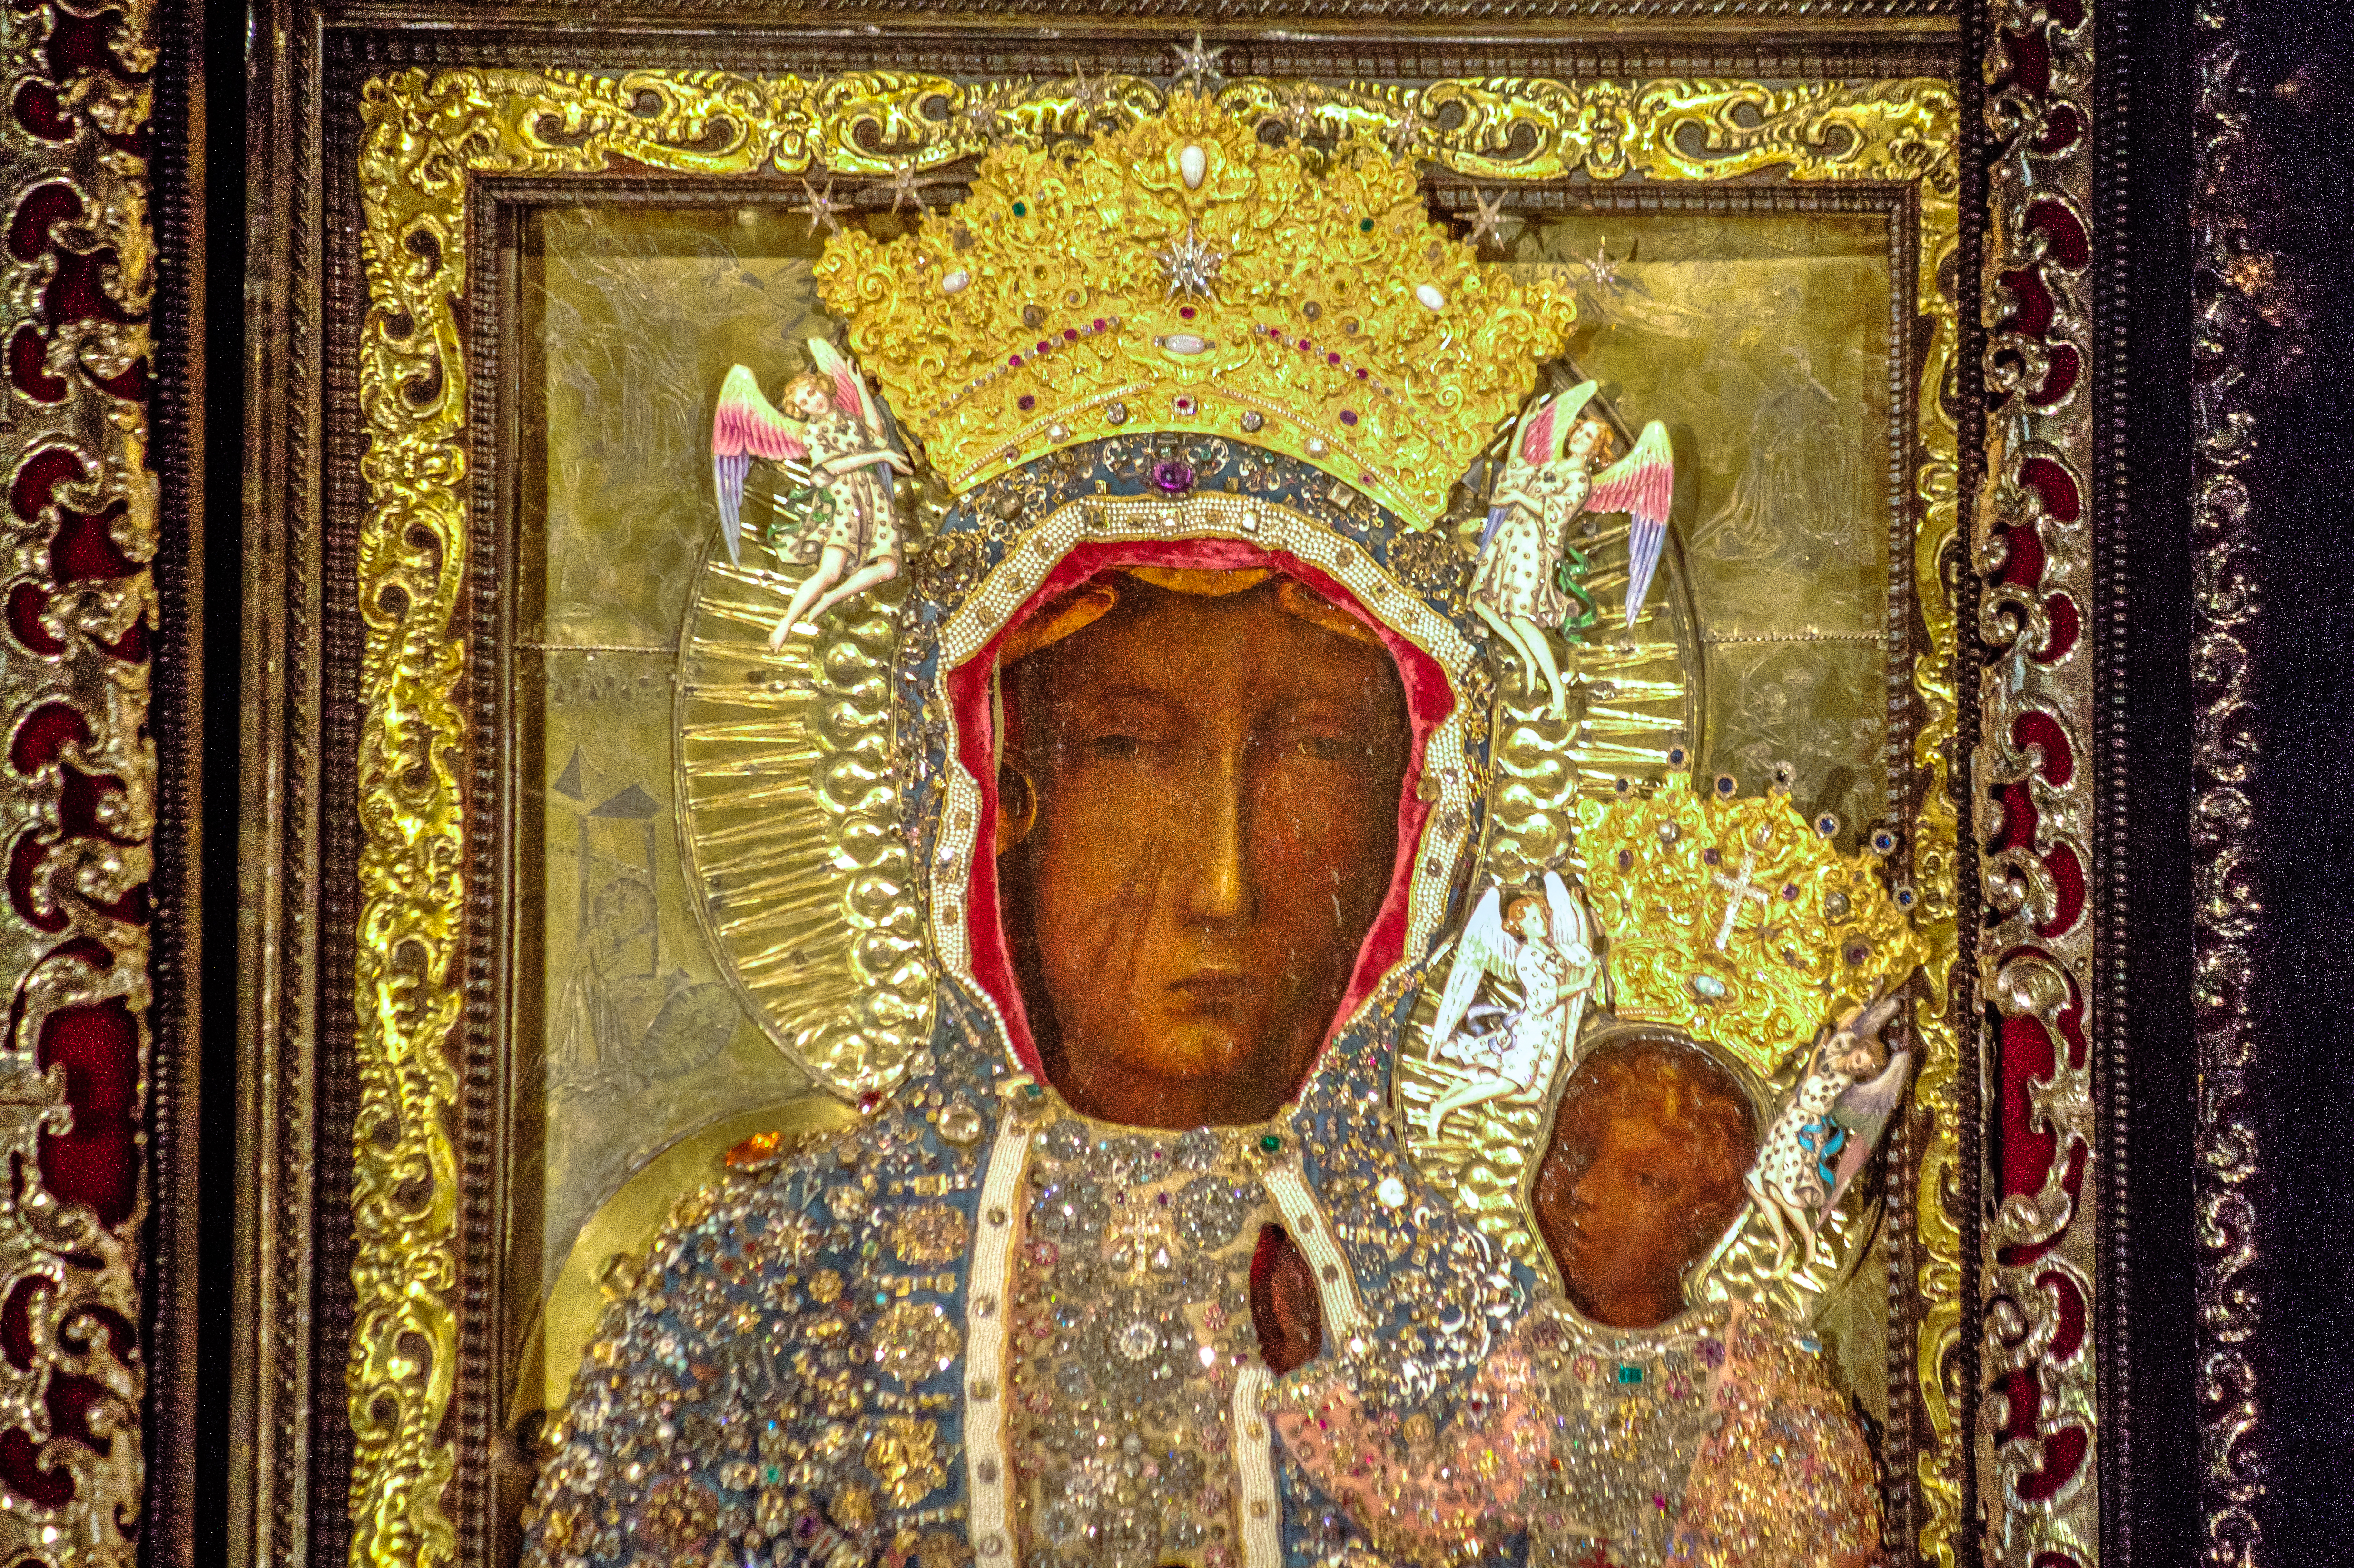 Black Madonna of Częstochowa in crown - by Robert Drózd (NMP-Czestochowska-w-koronie.jpg) [CC BY-SA 3.0 (https://creativecommons.org/licenses/by-sa/3.0/deed.en)], via Wikimedia Commons